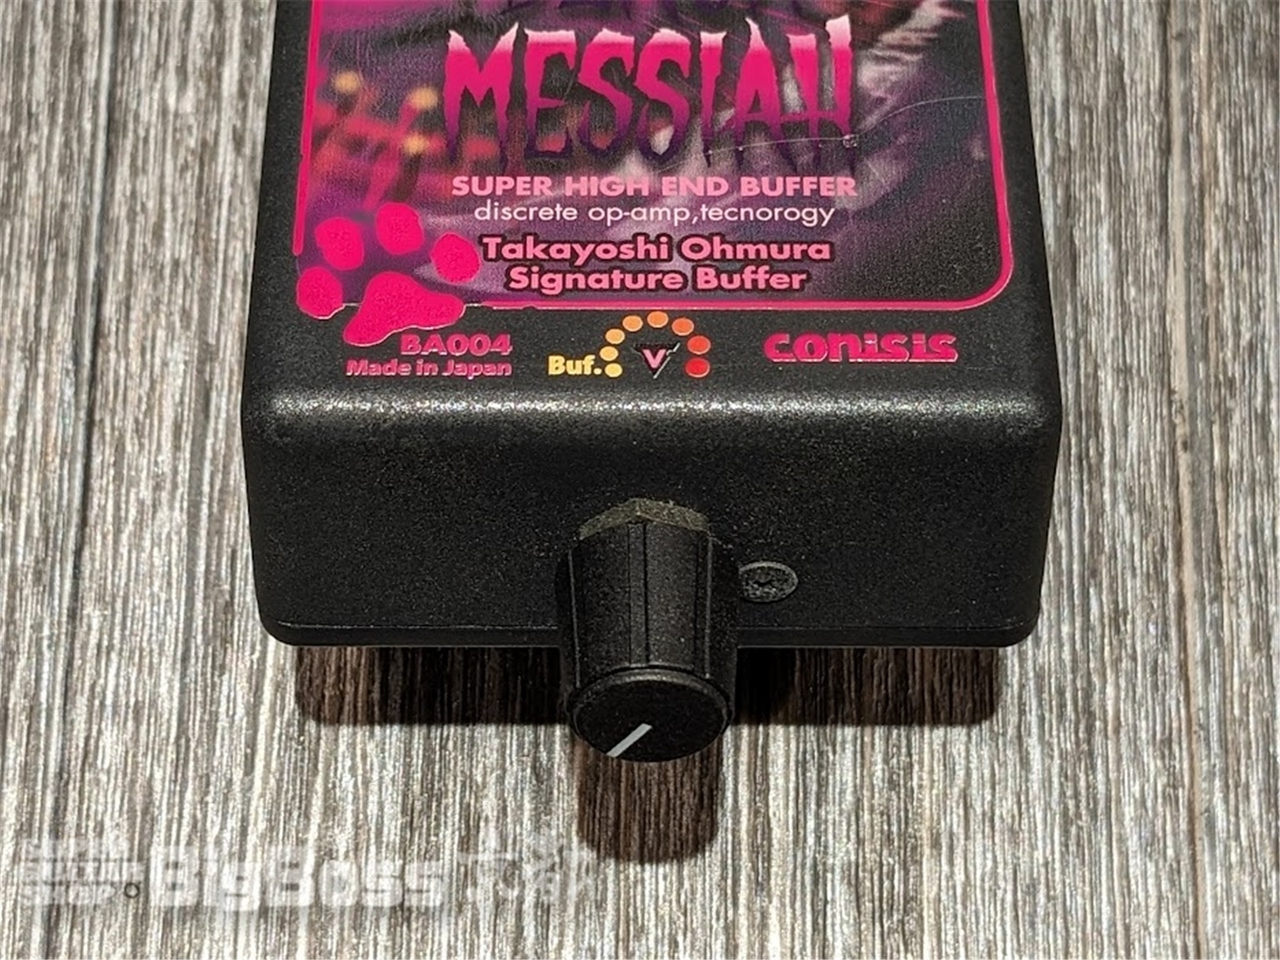 CONISIS ギター用バッファー BLACK MESSIAH II BA004 - ギター